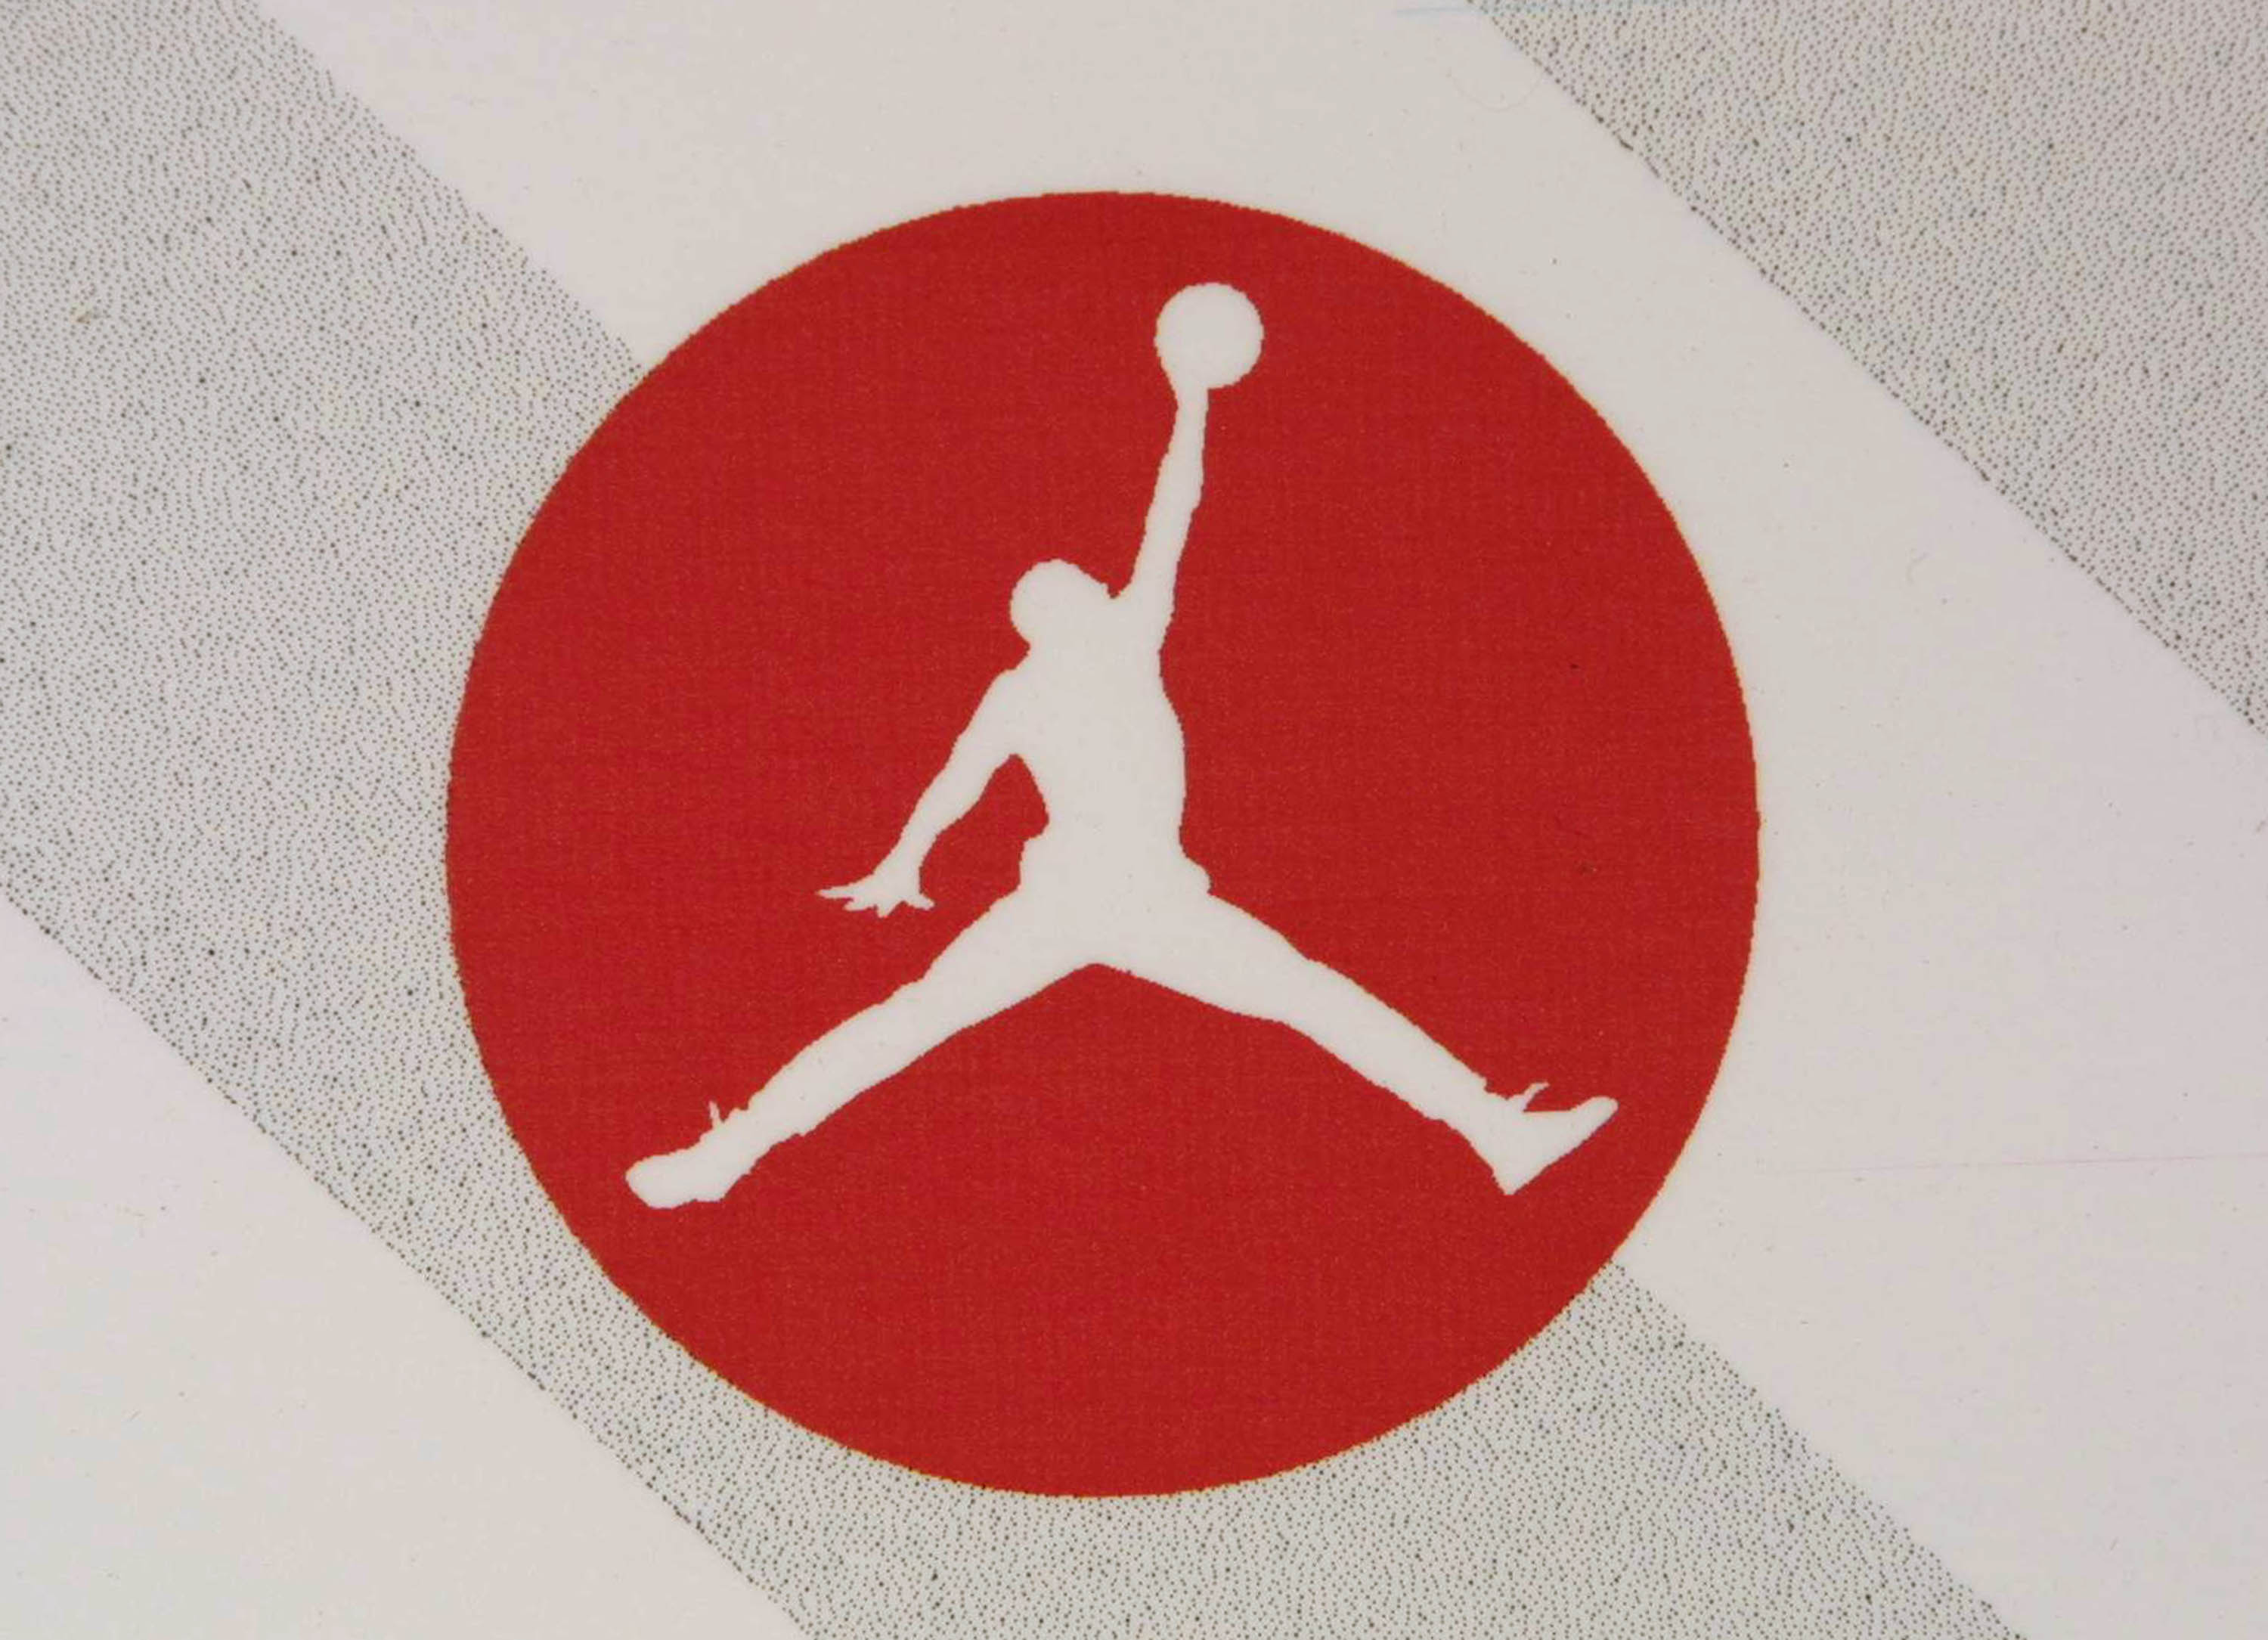 Air Jordan 1 High OG “Pollen” Receives Wu-Tang Vibes